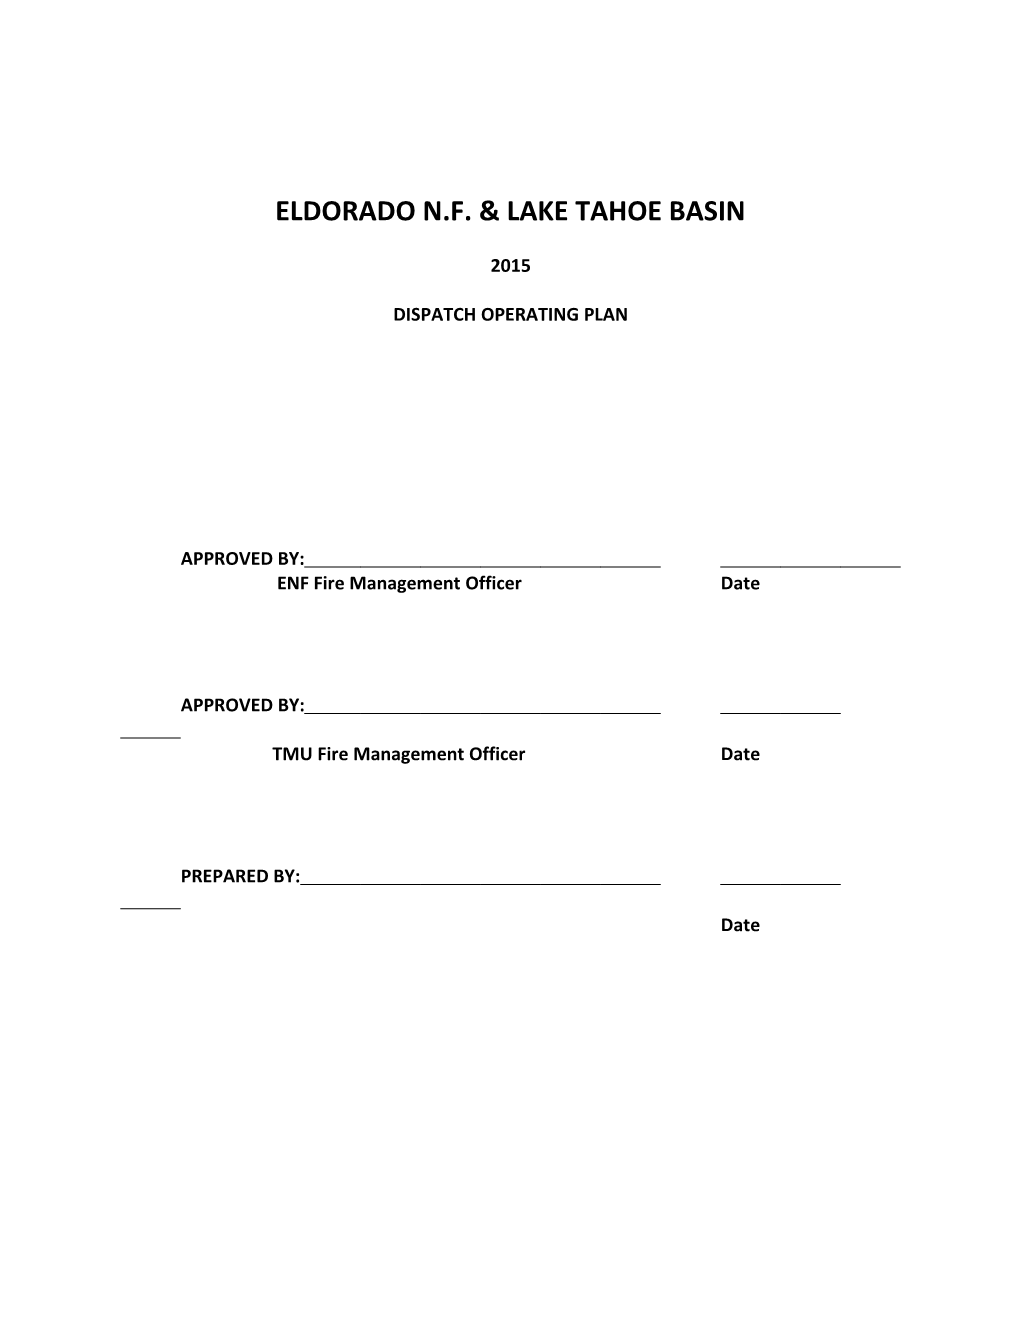 Eldorado N.F. & Lake Tahoe Basin